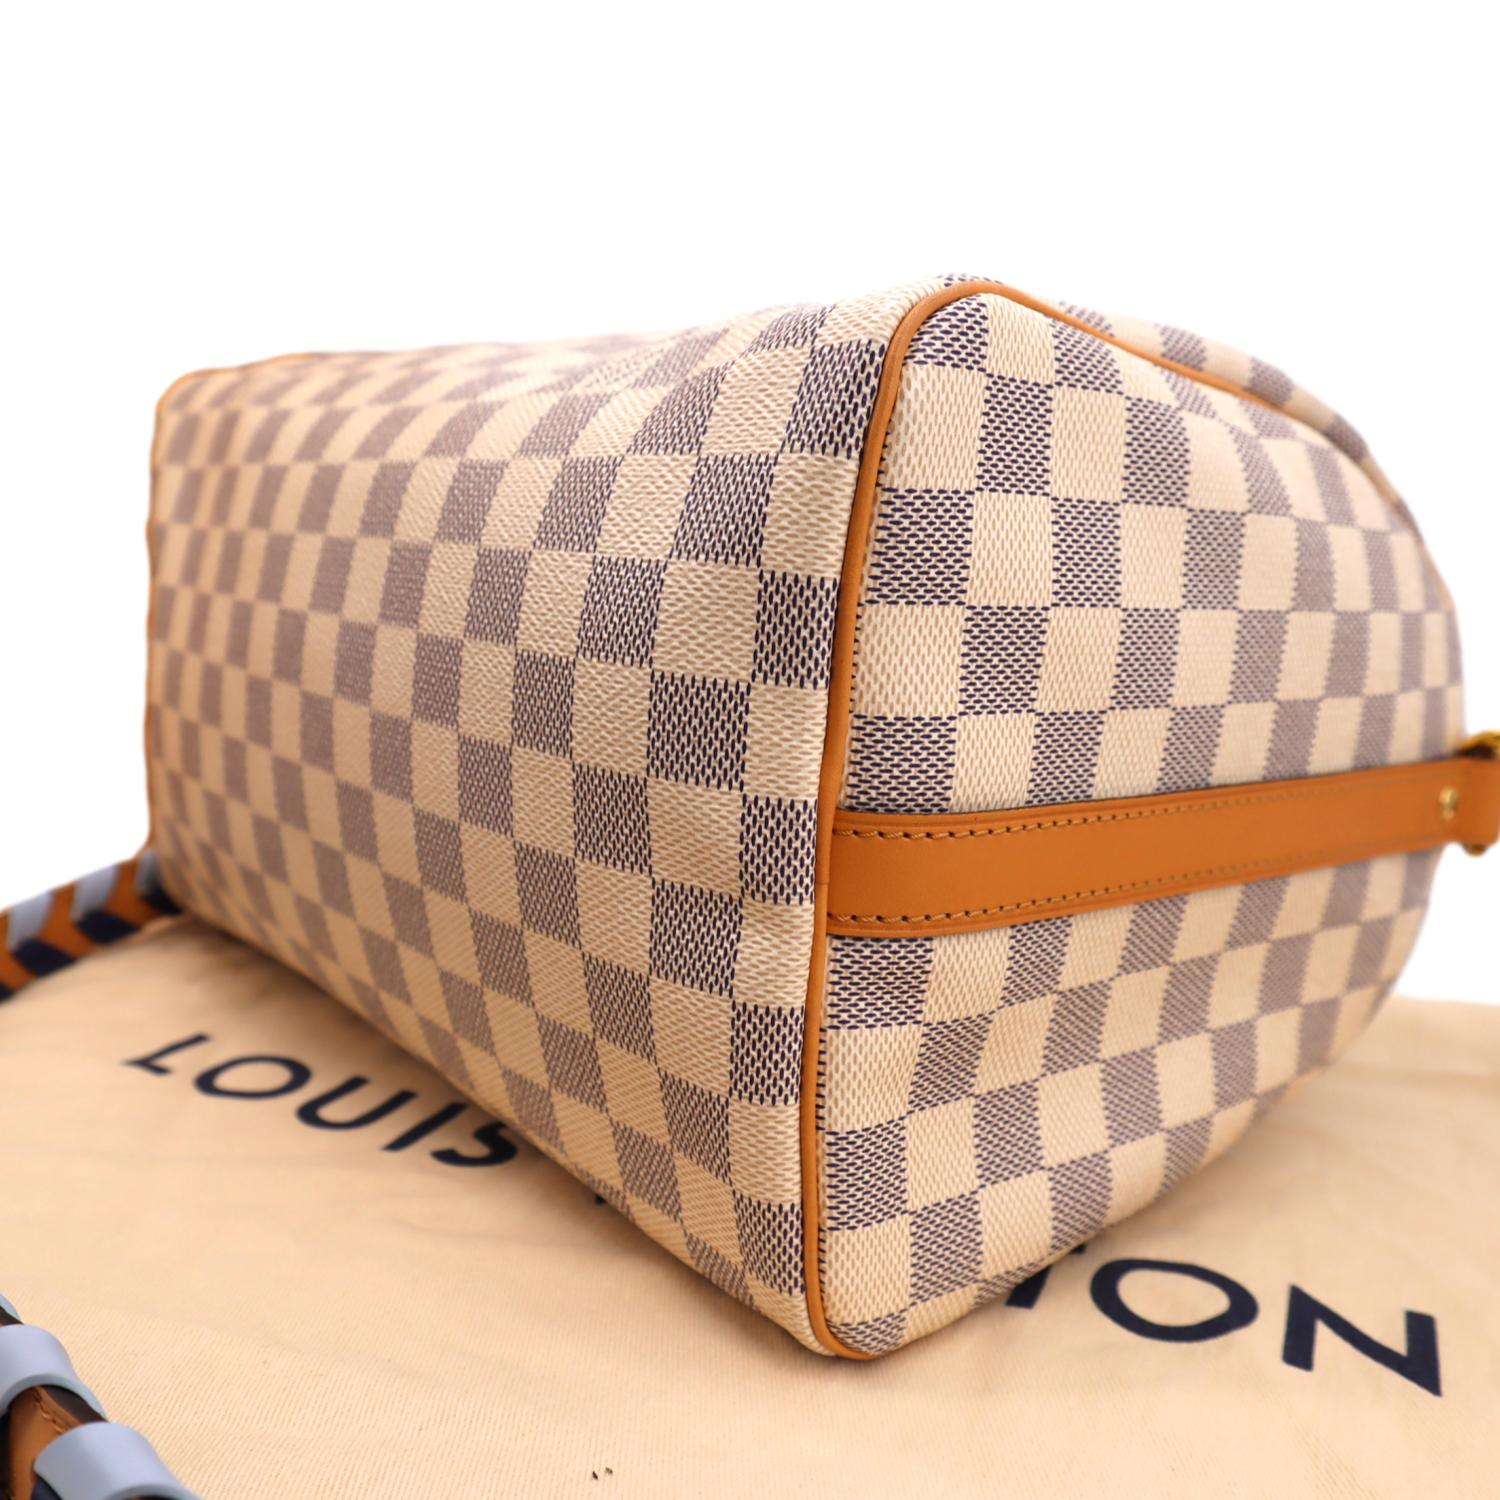 Louis Vuitton Damier Azur Coated Canvas Speedy 30 Bag